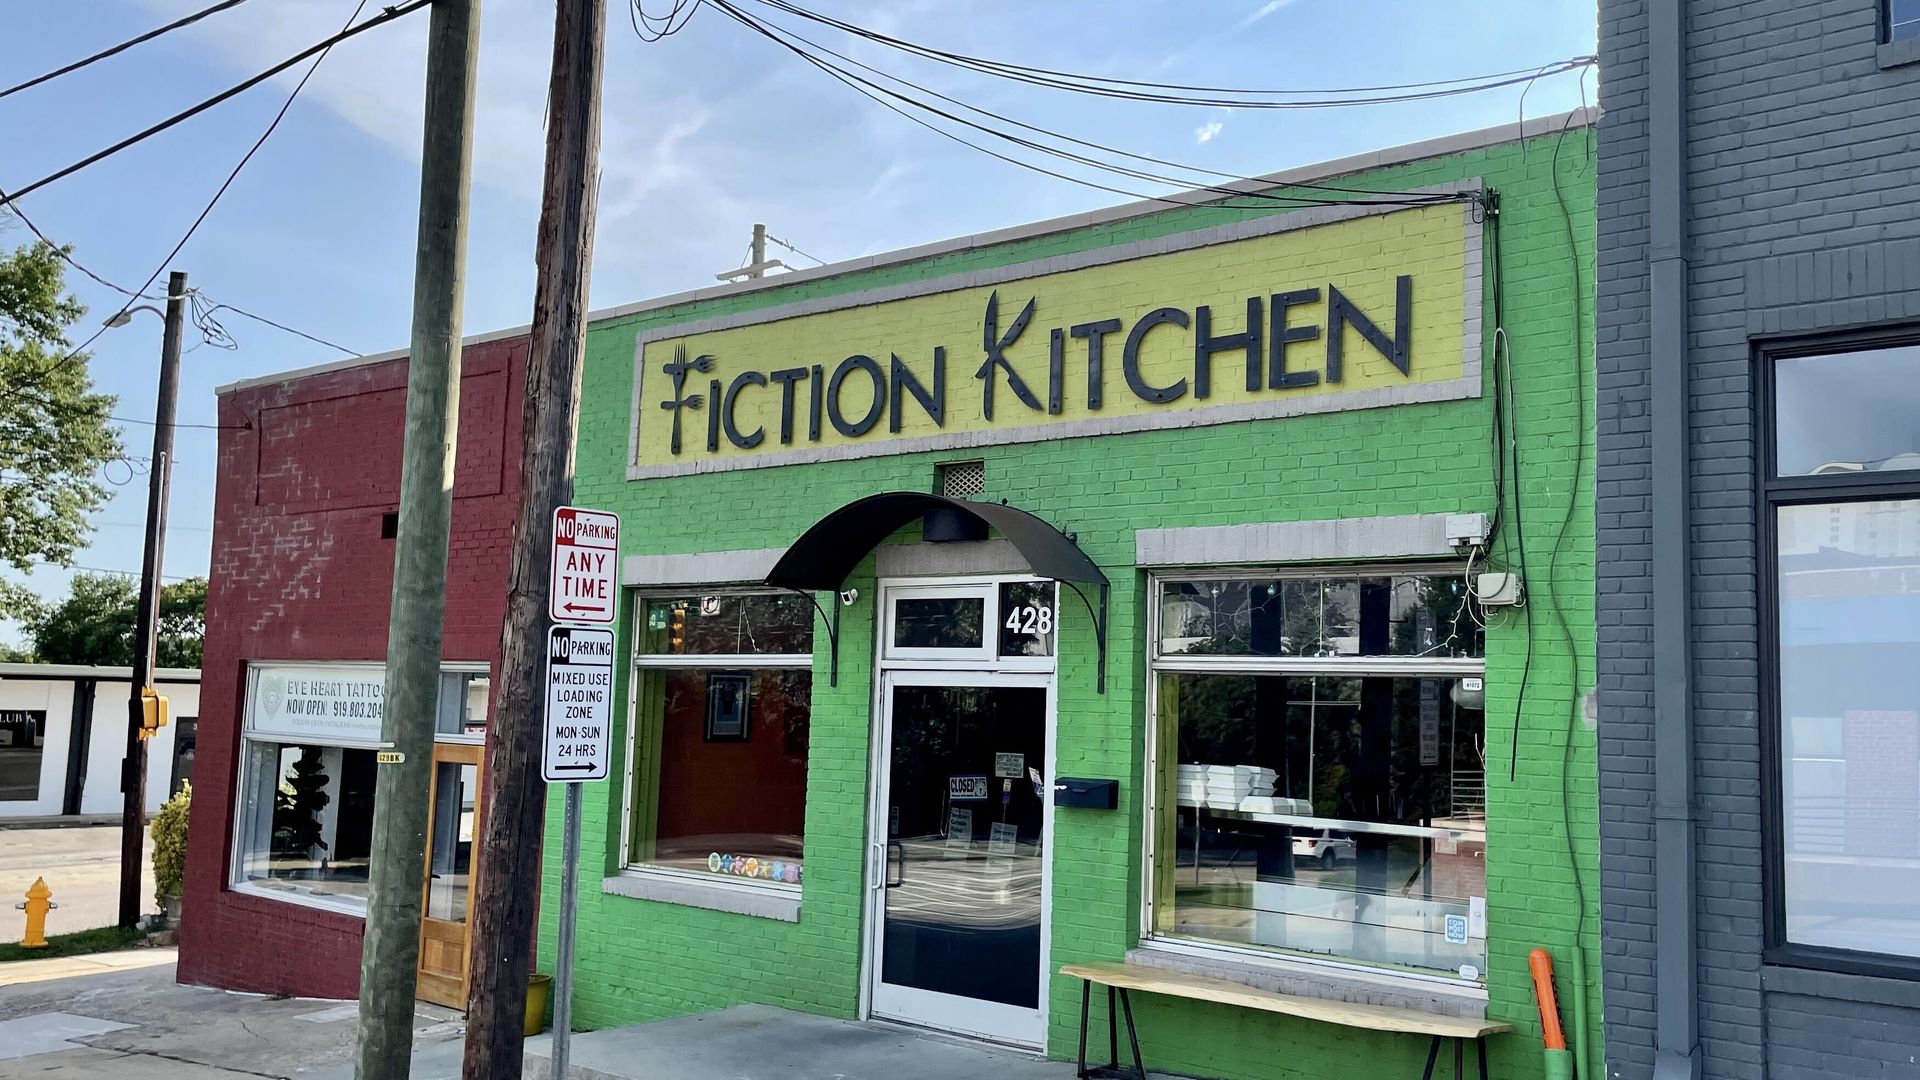 Exterior of Fiction Kitchen restaurant